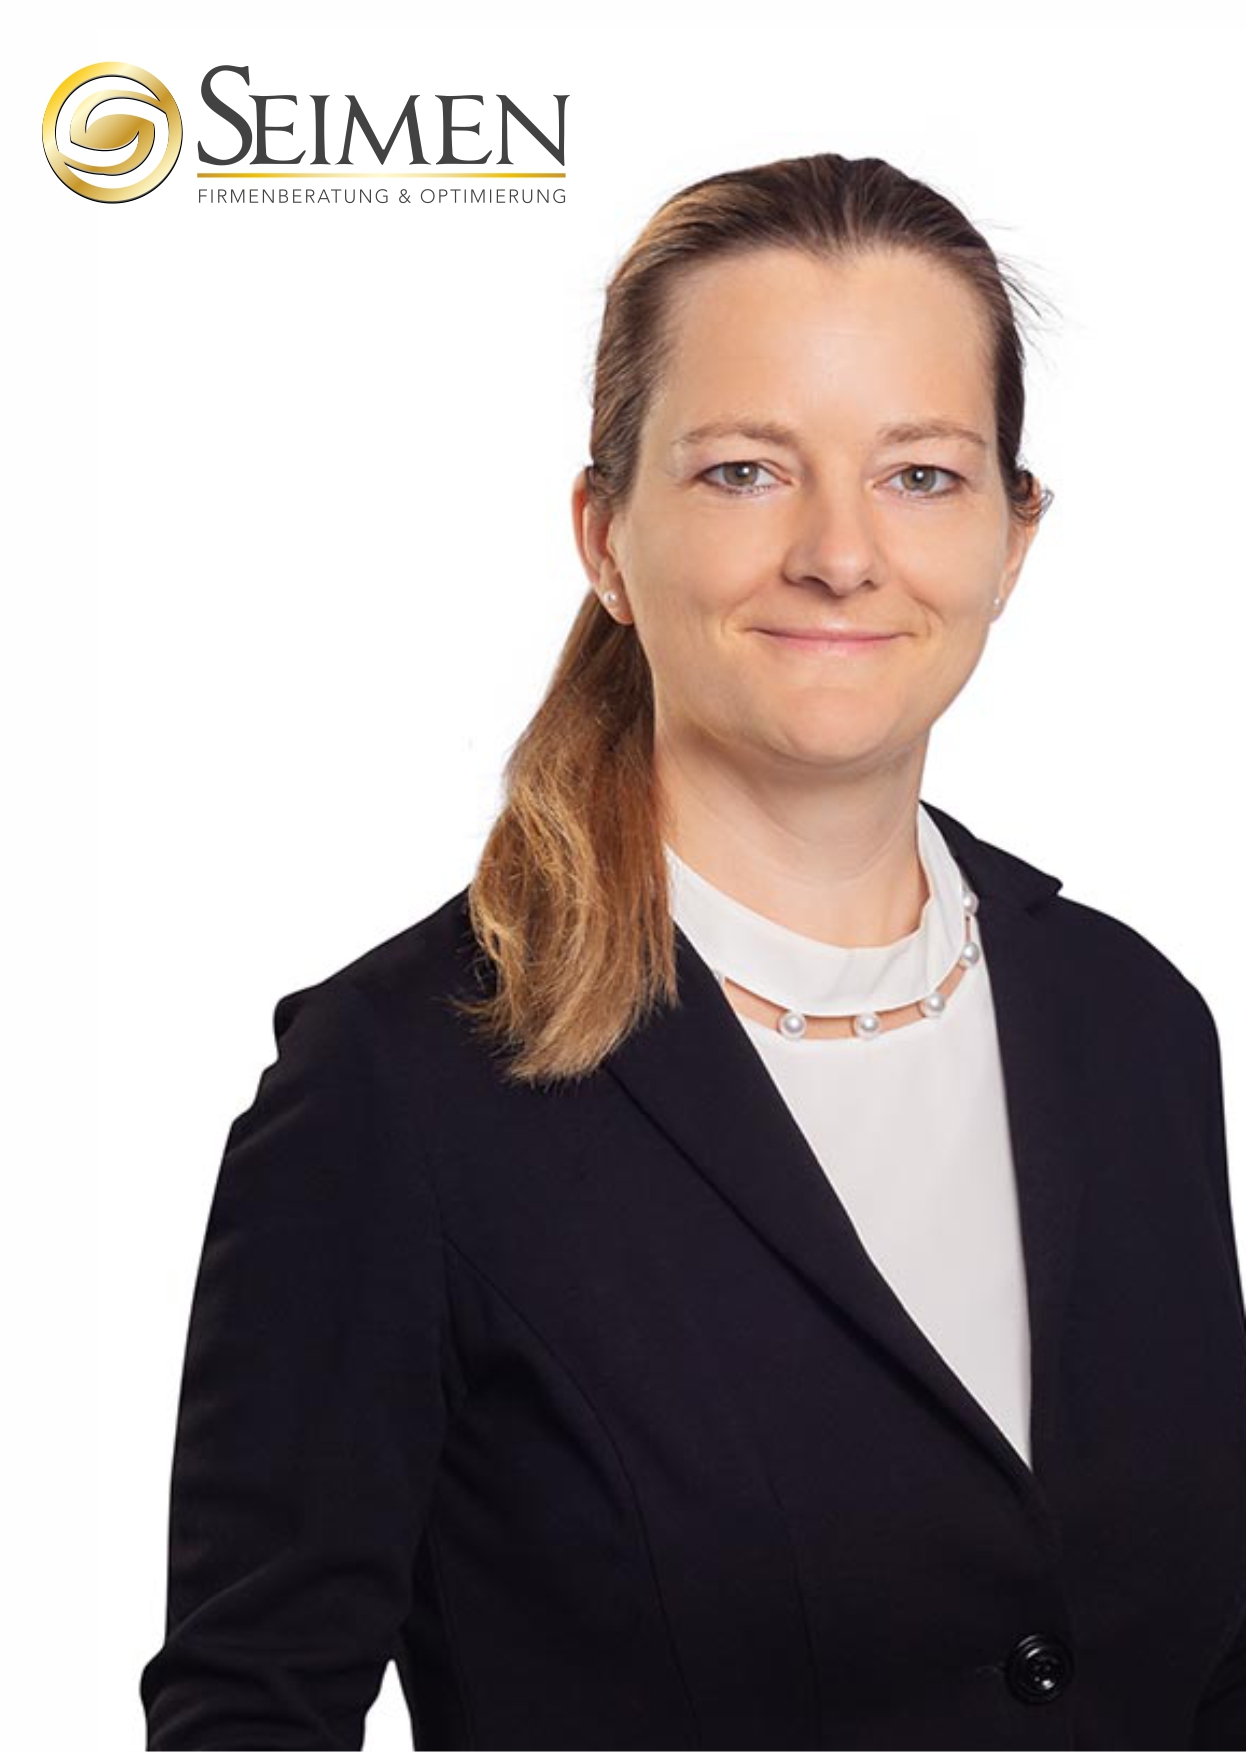 Simone Seimen - Buchhalterin in Epfendorf